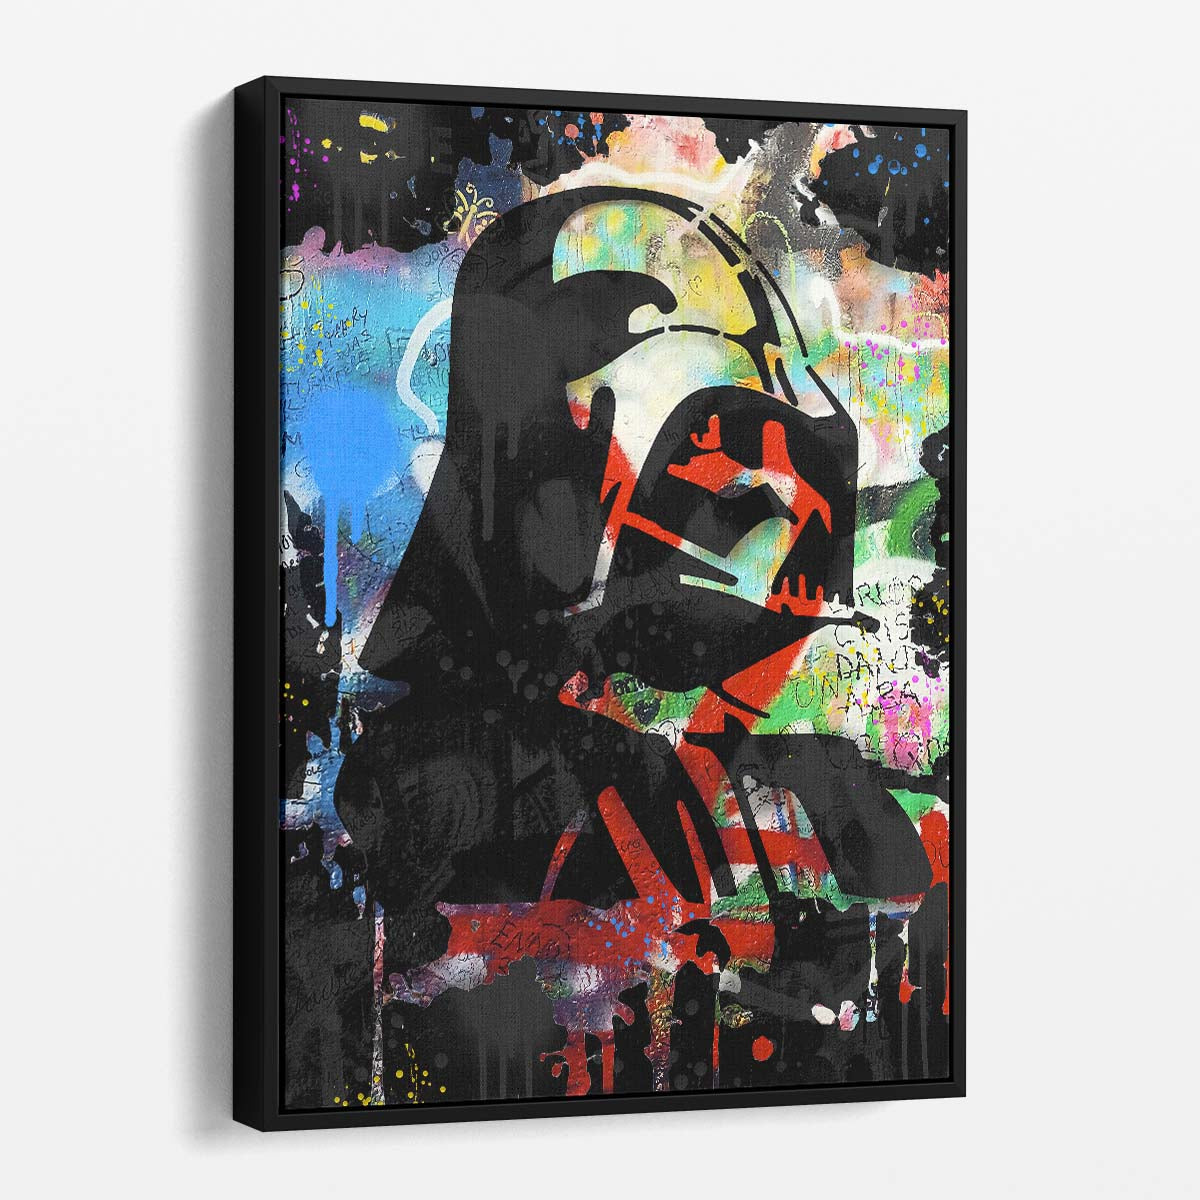 Darth Vader Star Wars Graffiti Wall Art by Luxuriance Designs. Made in USA.